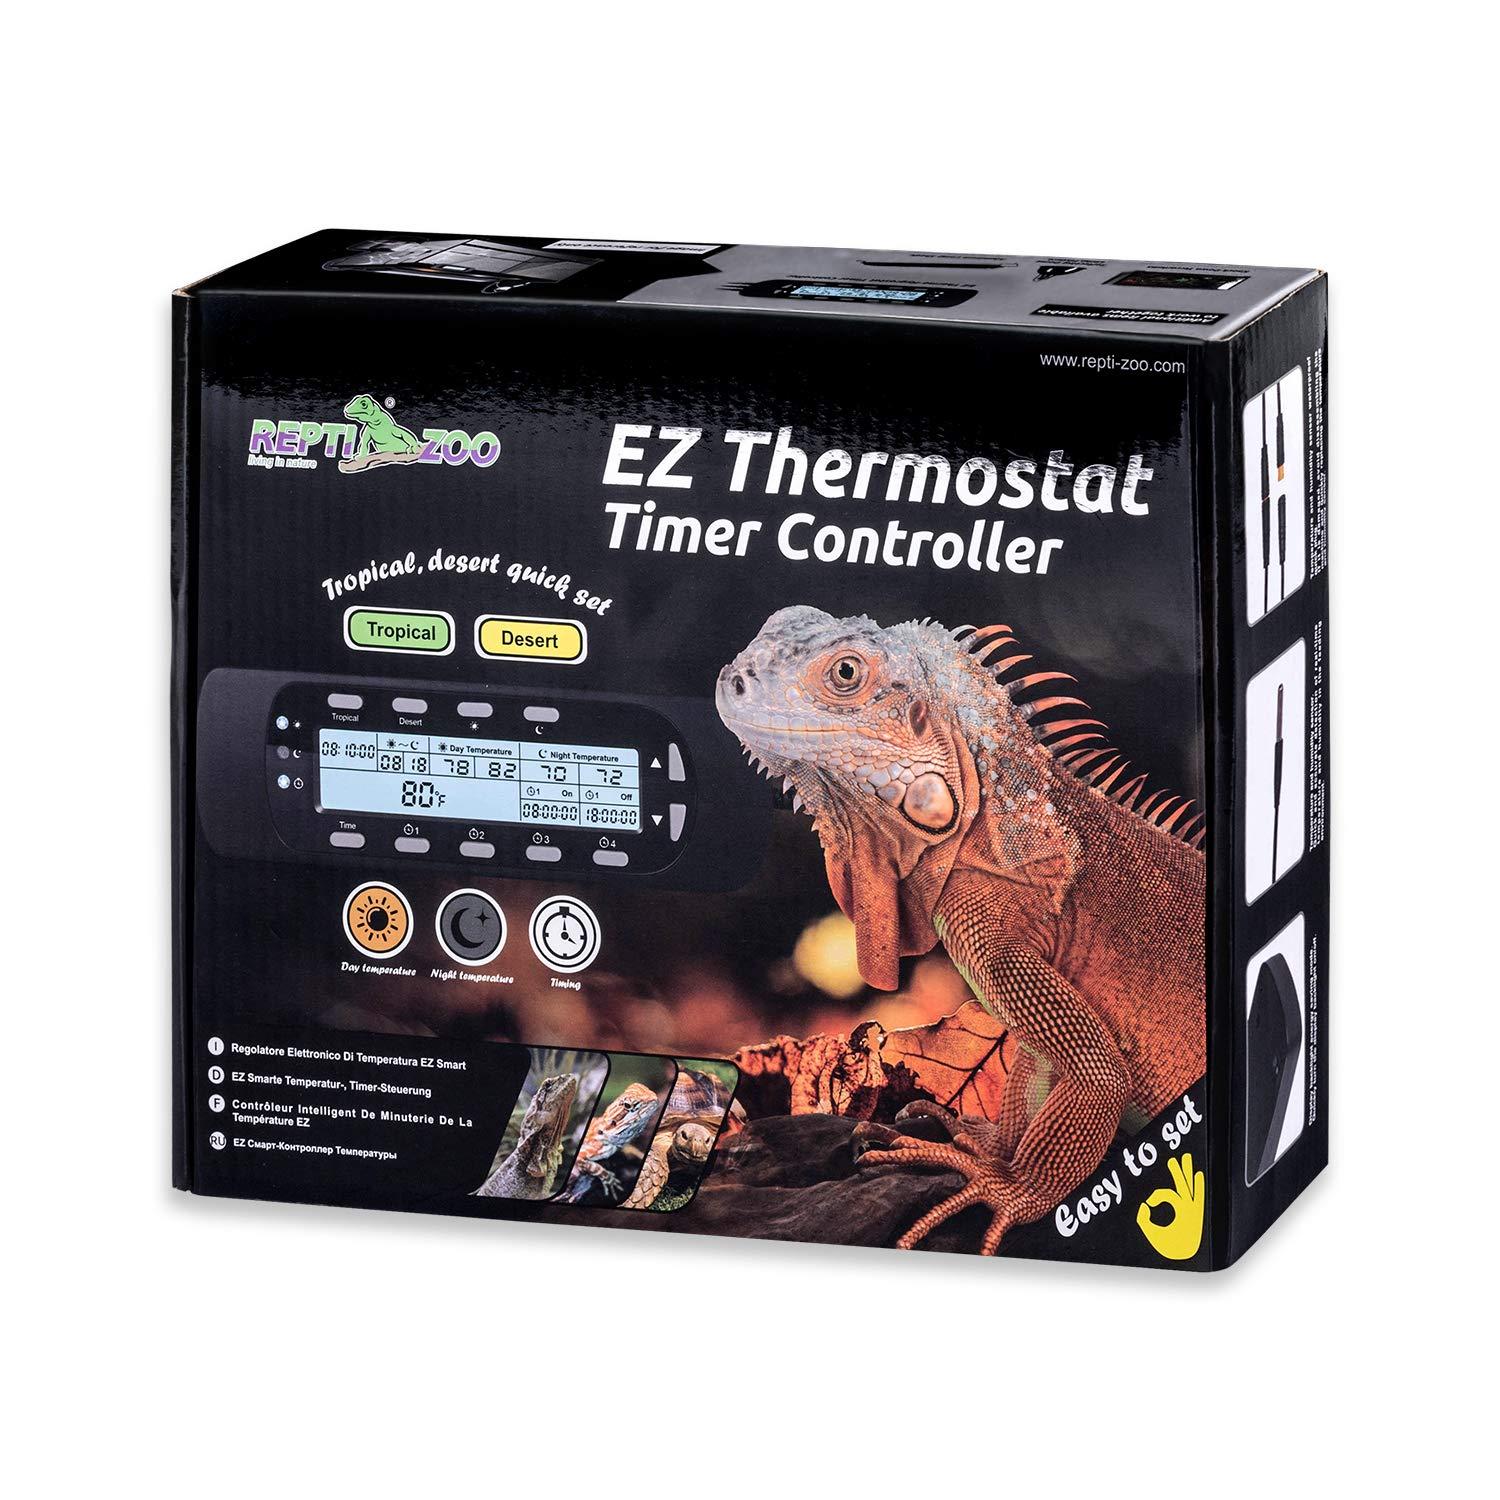 Humidity Sensor Thermostat Humidistat Control+Reptile Humidifier Fogger 4L  Tank